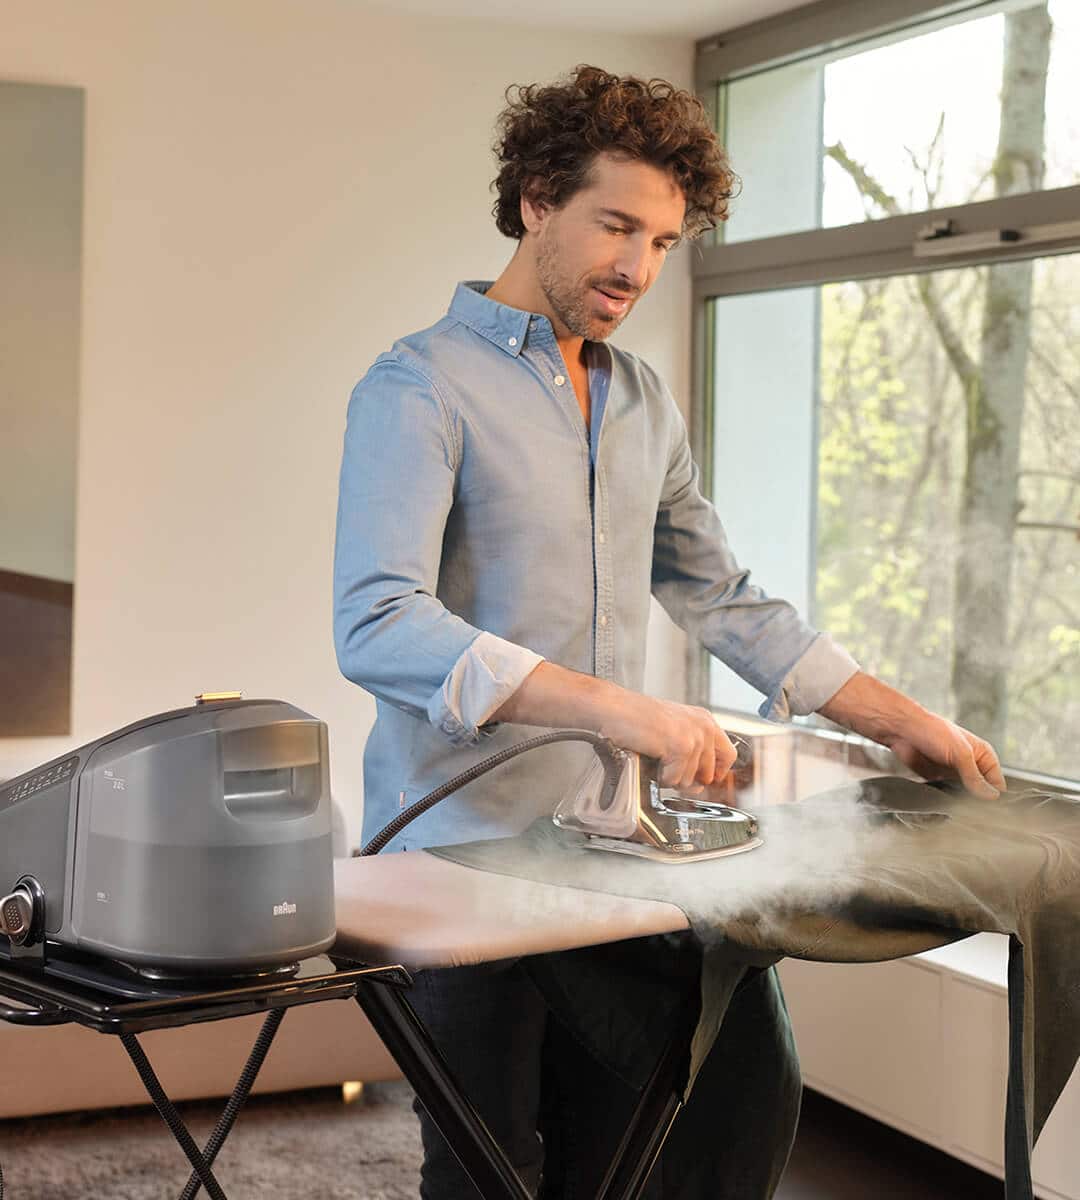 Braun CareStyle 7 Pro steam generator iron – The  powerful ironing system